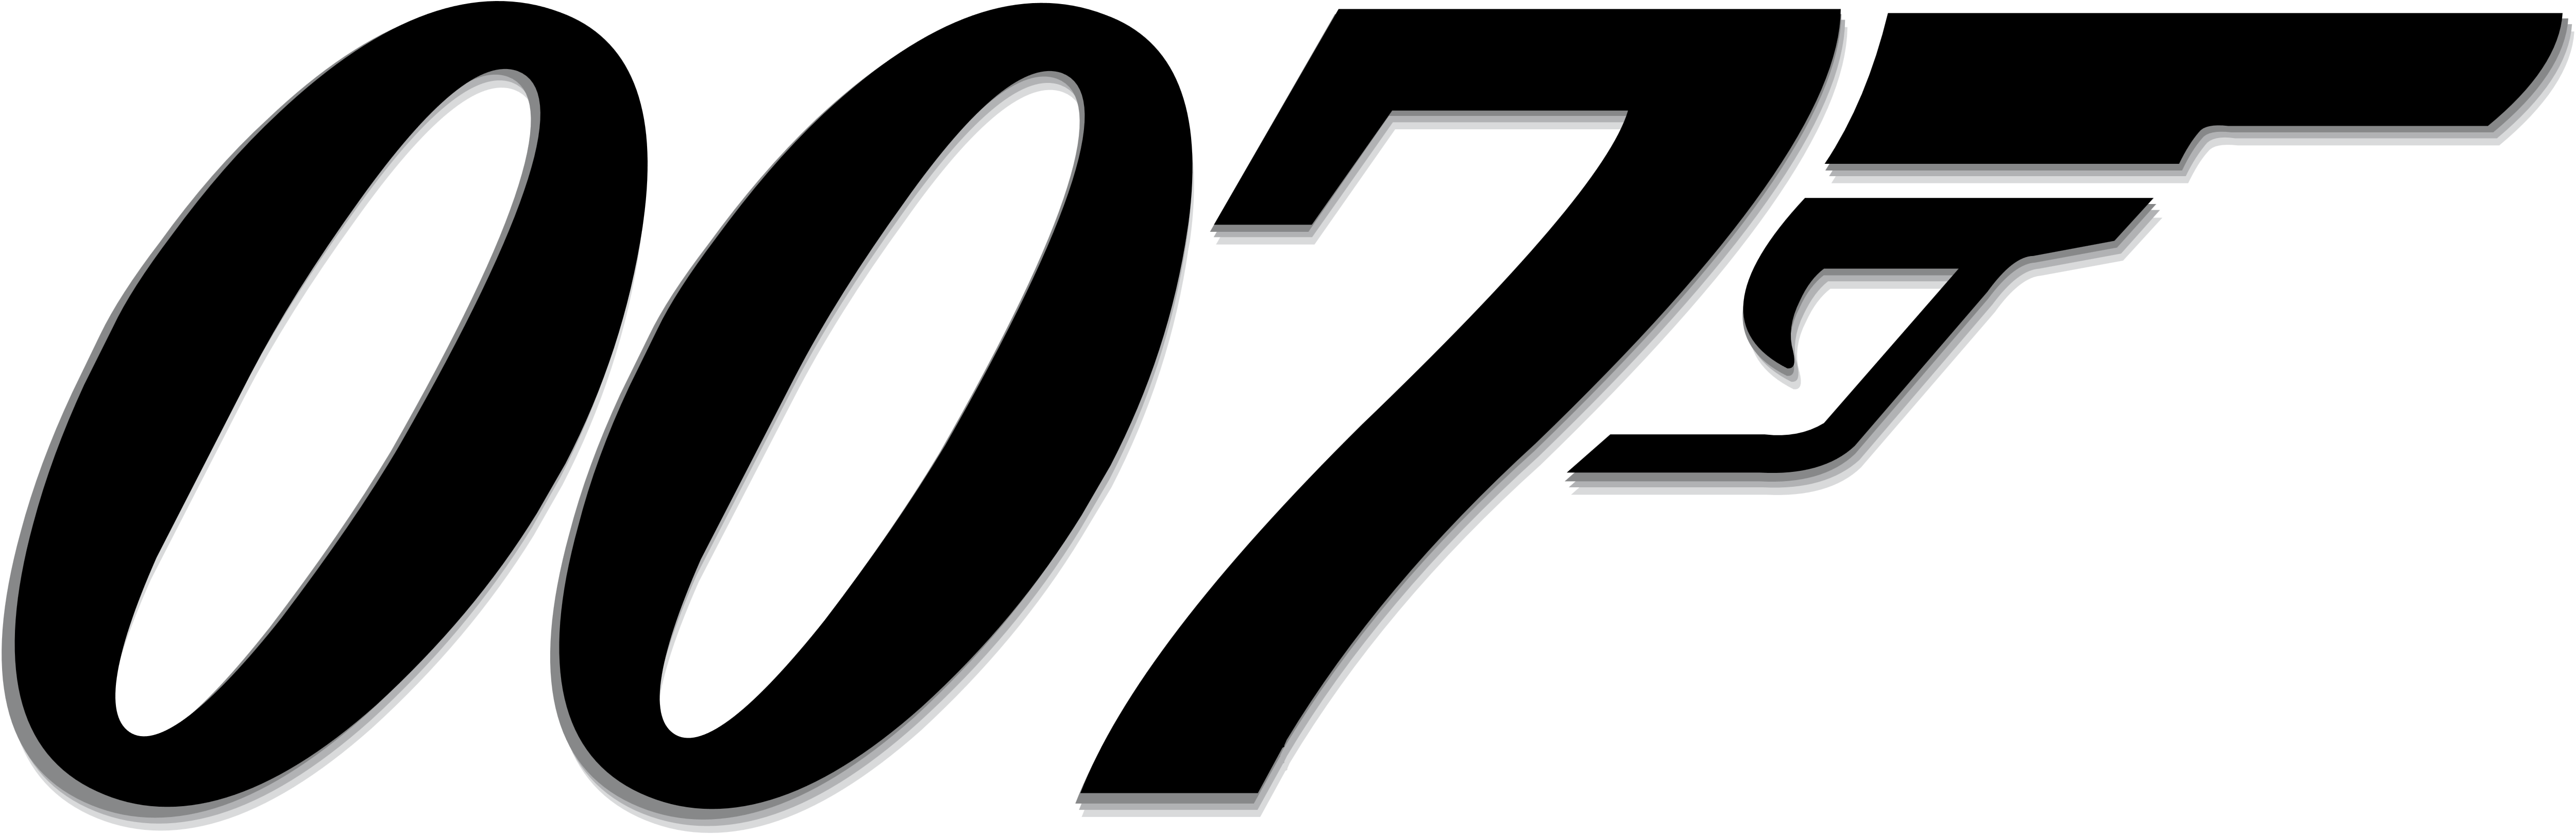 James_Bond_007_logo.png